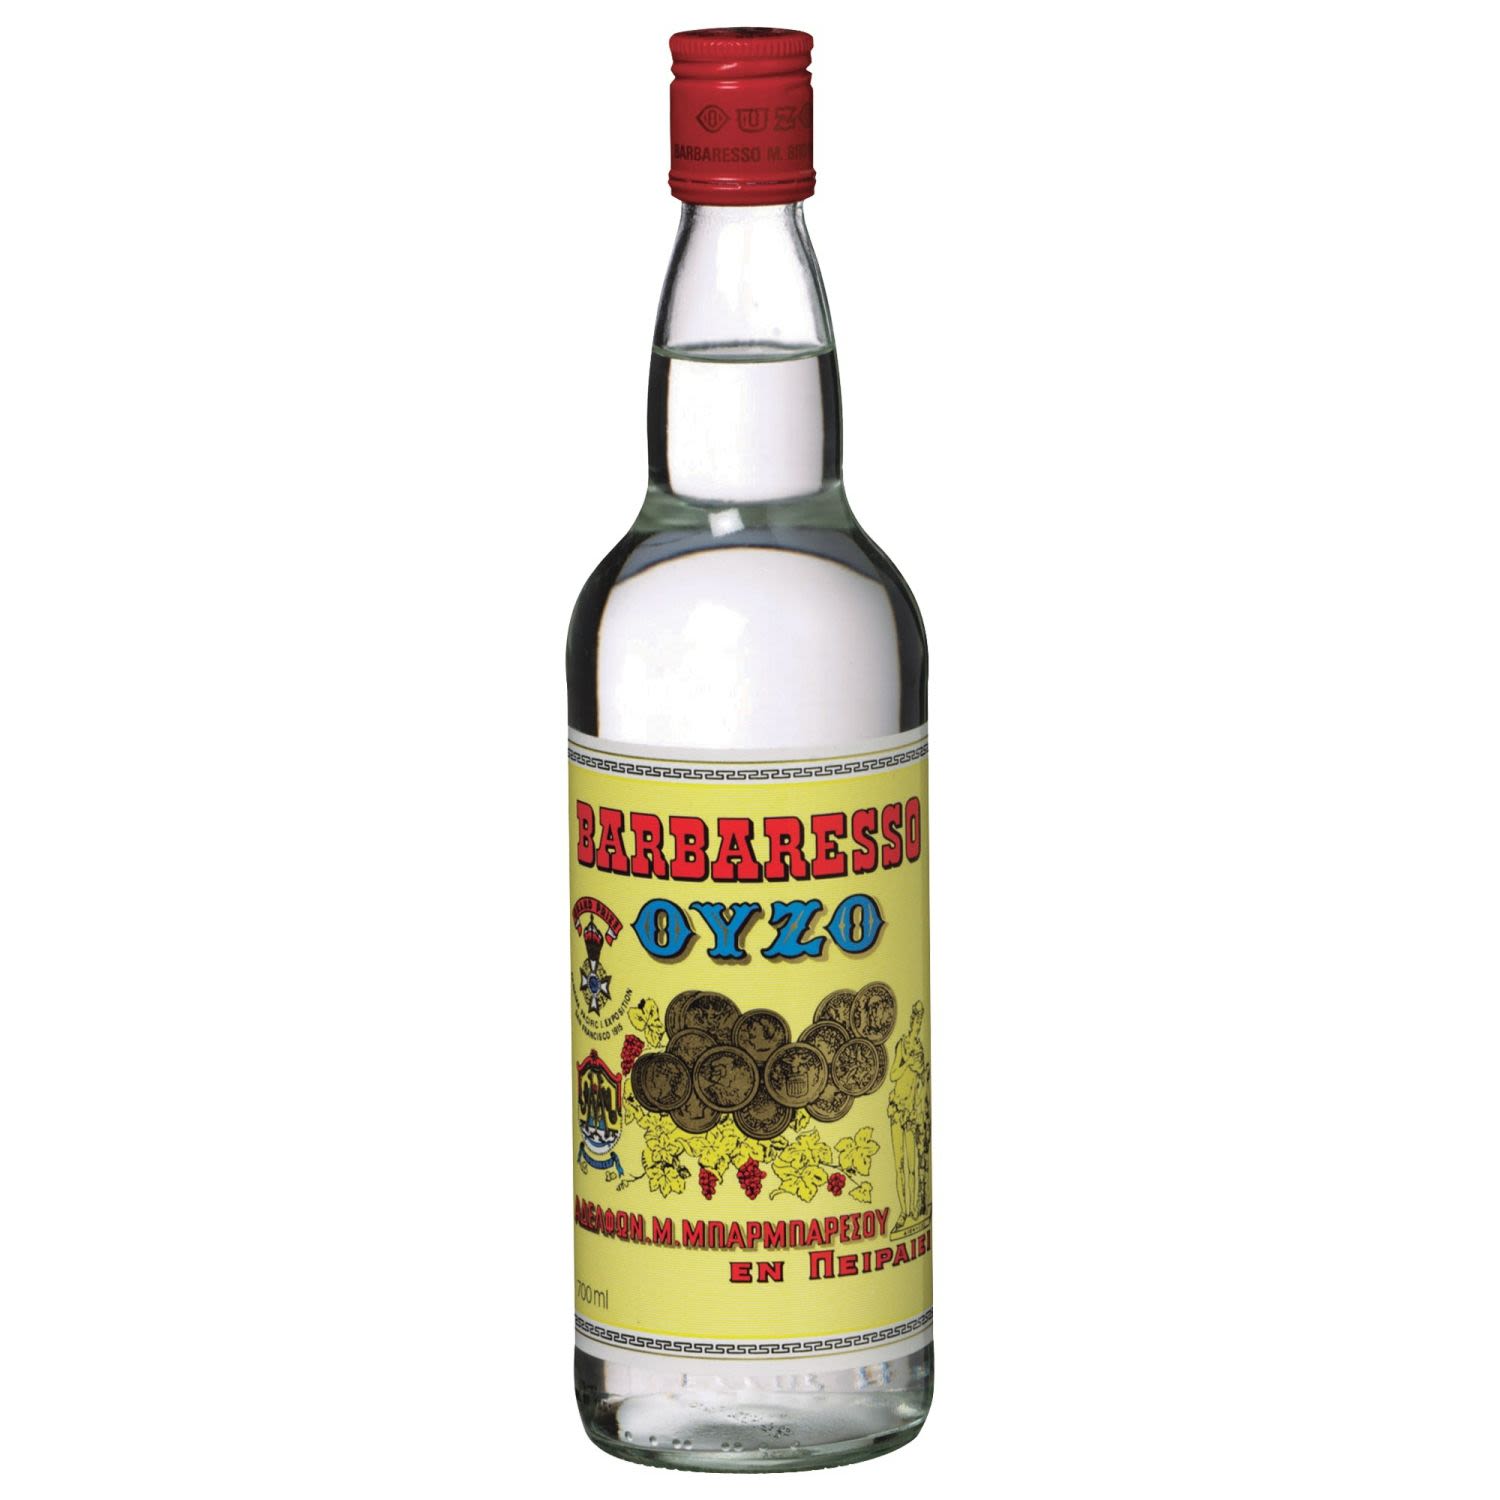 Barbaresso Ouzo 700mL Bottle